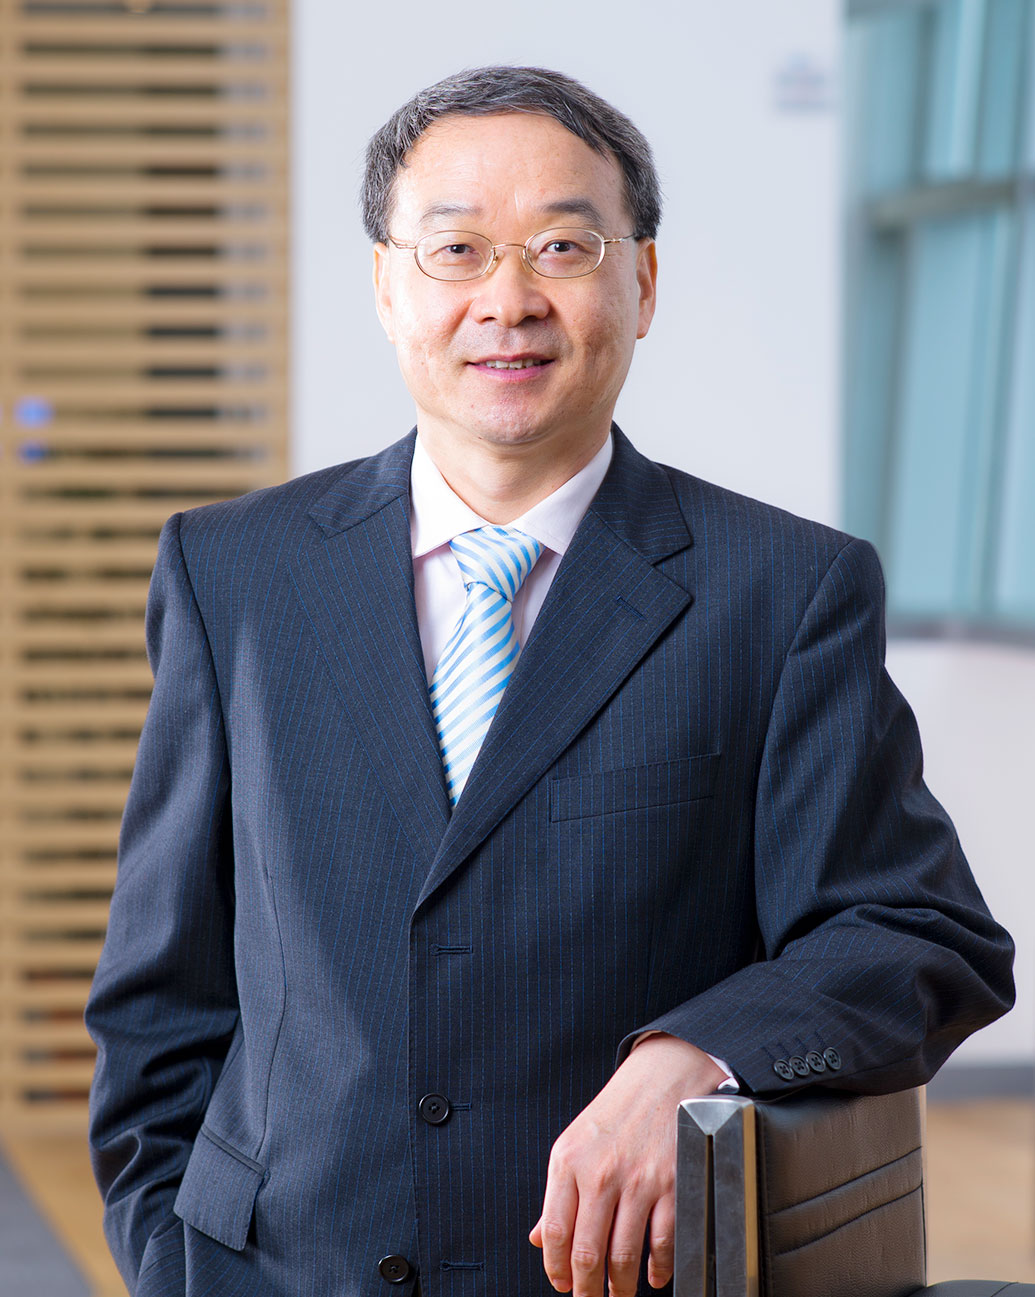 Professor Frank Chen Youhua